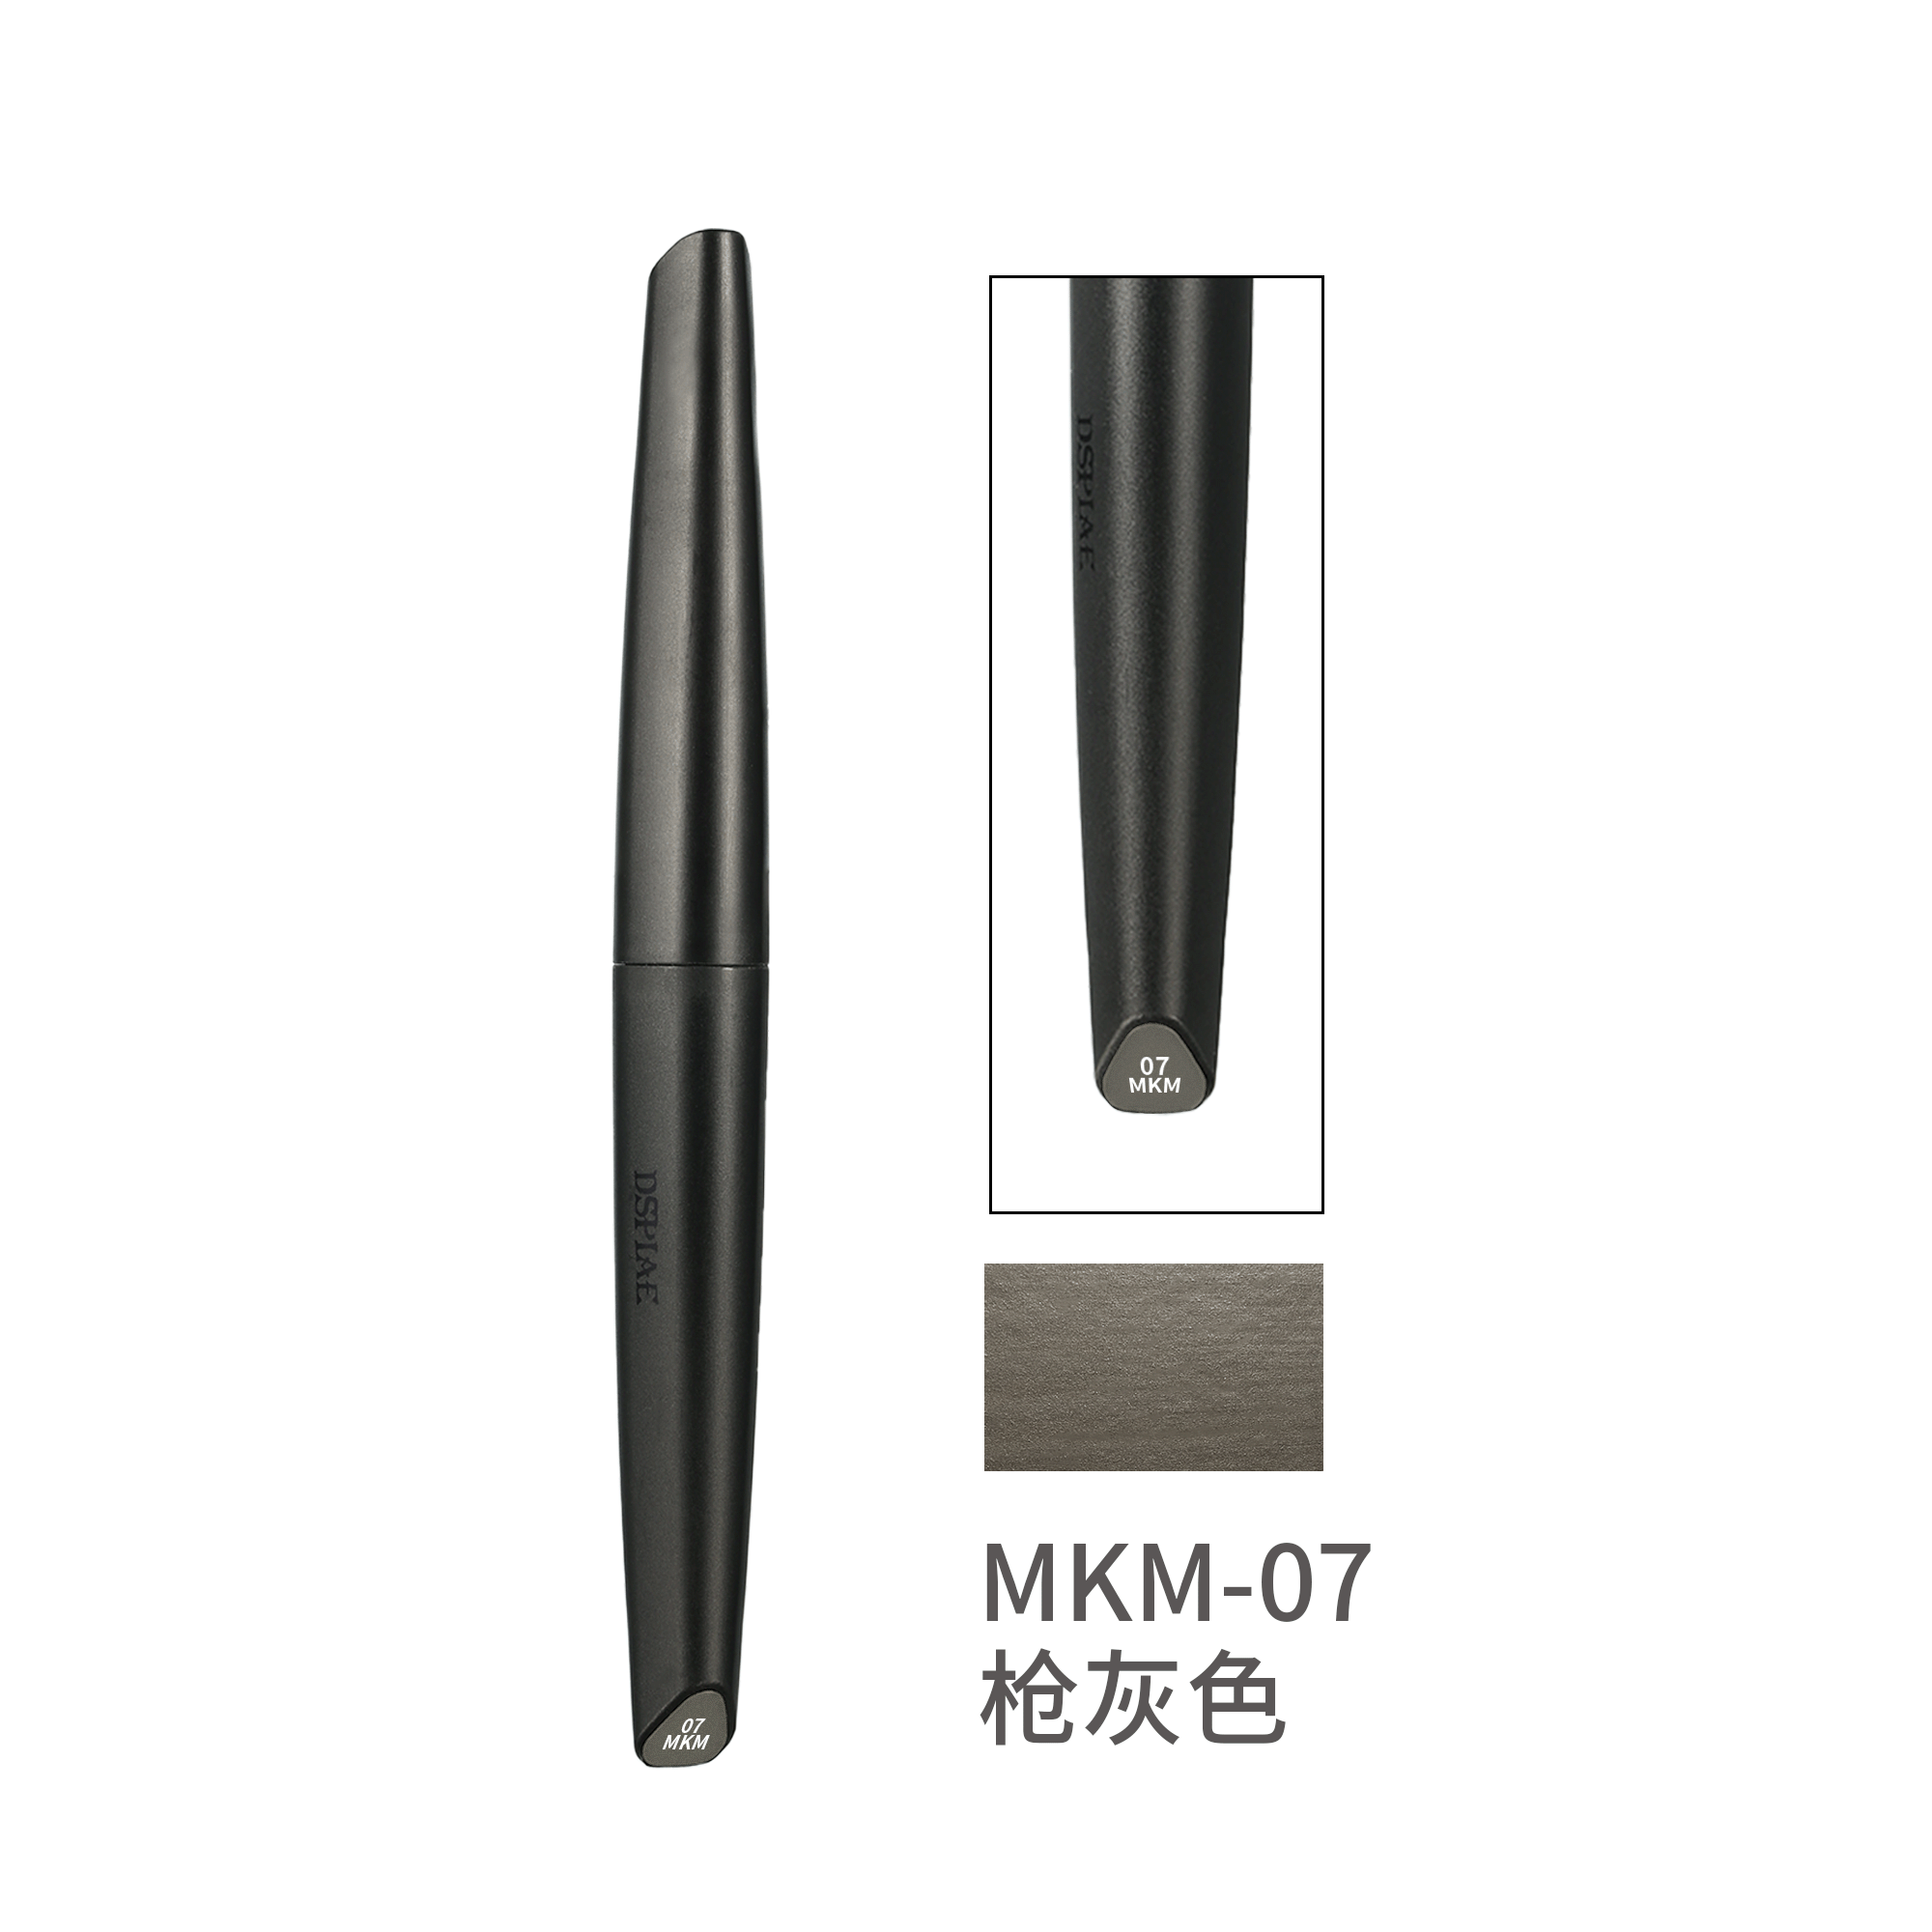 DSPIAE - MKM-07 Gun Metal